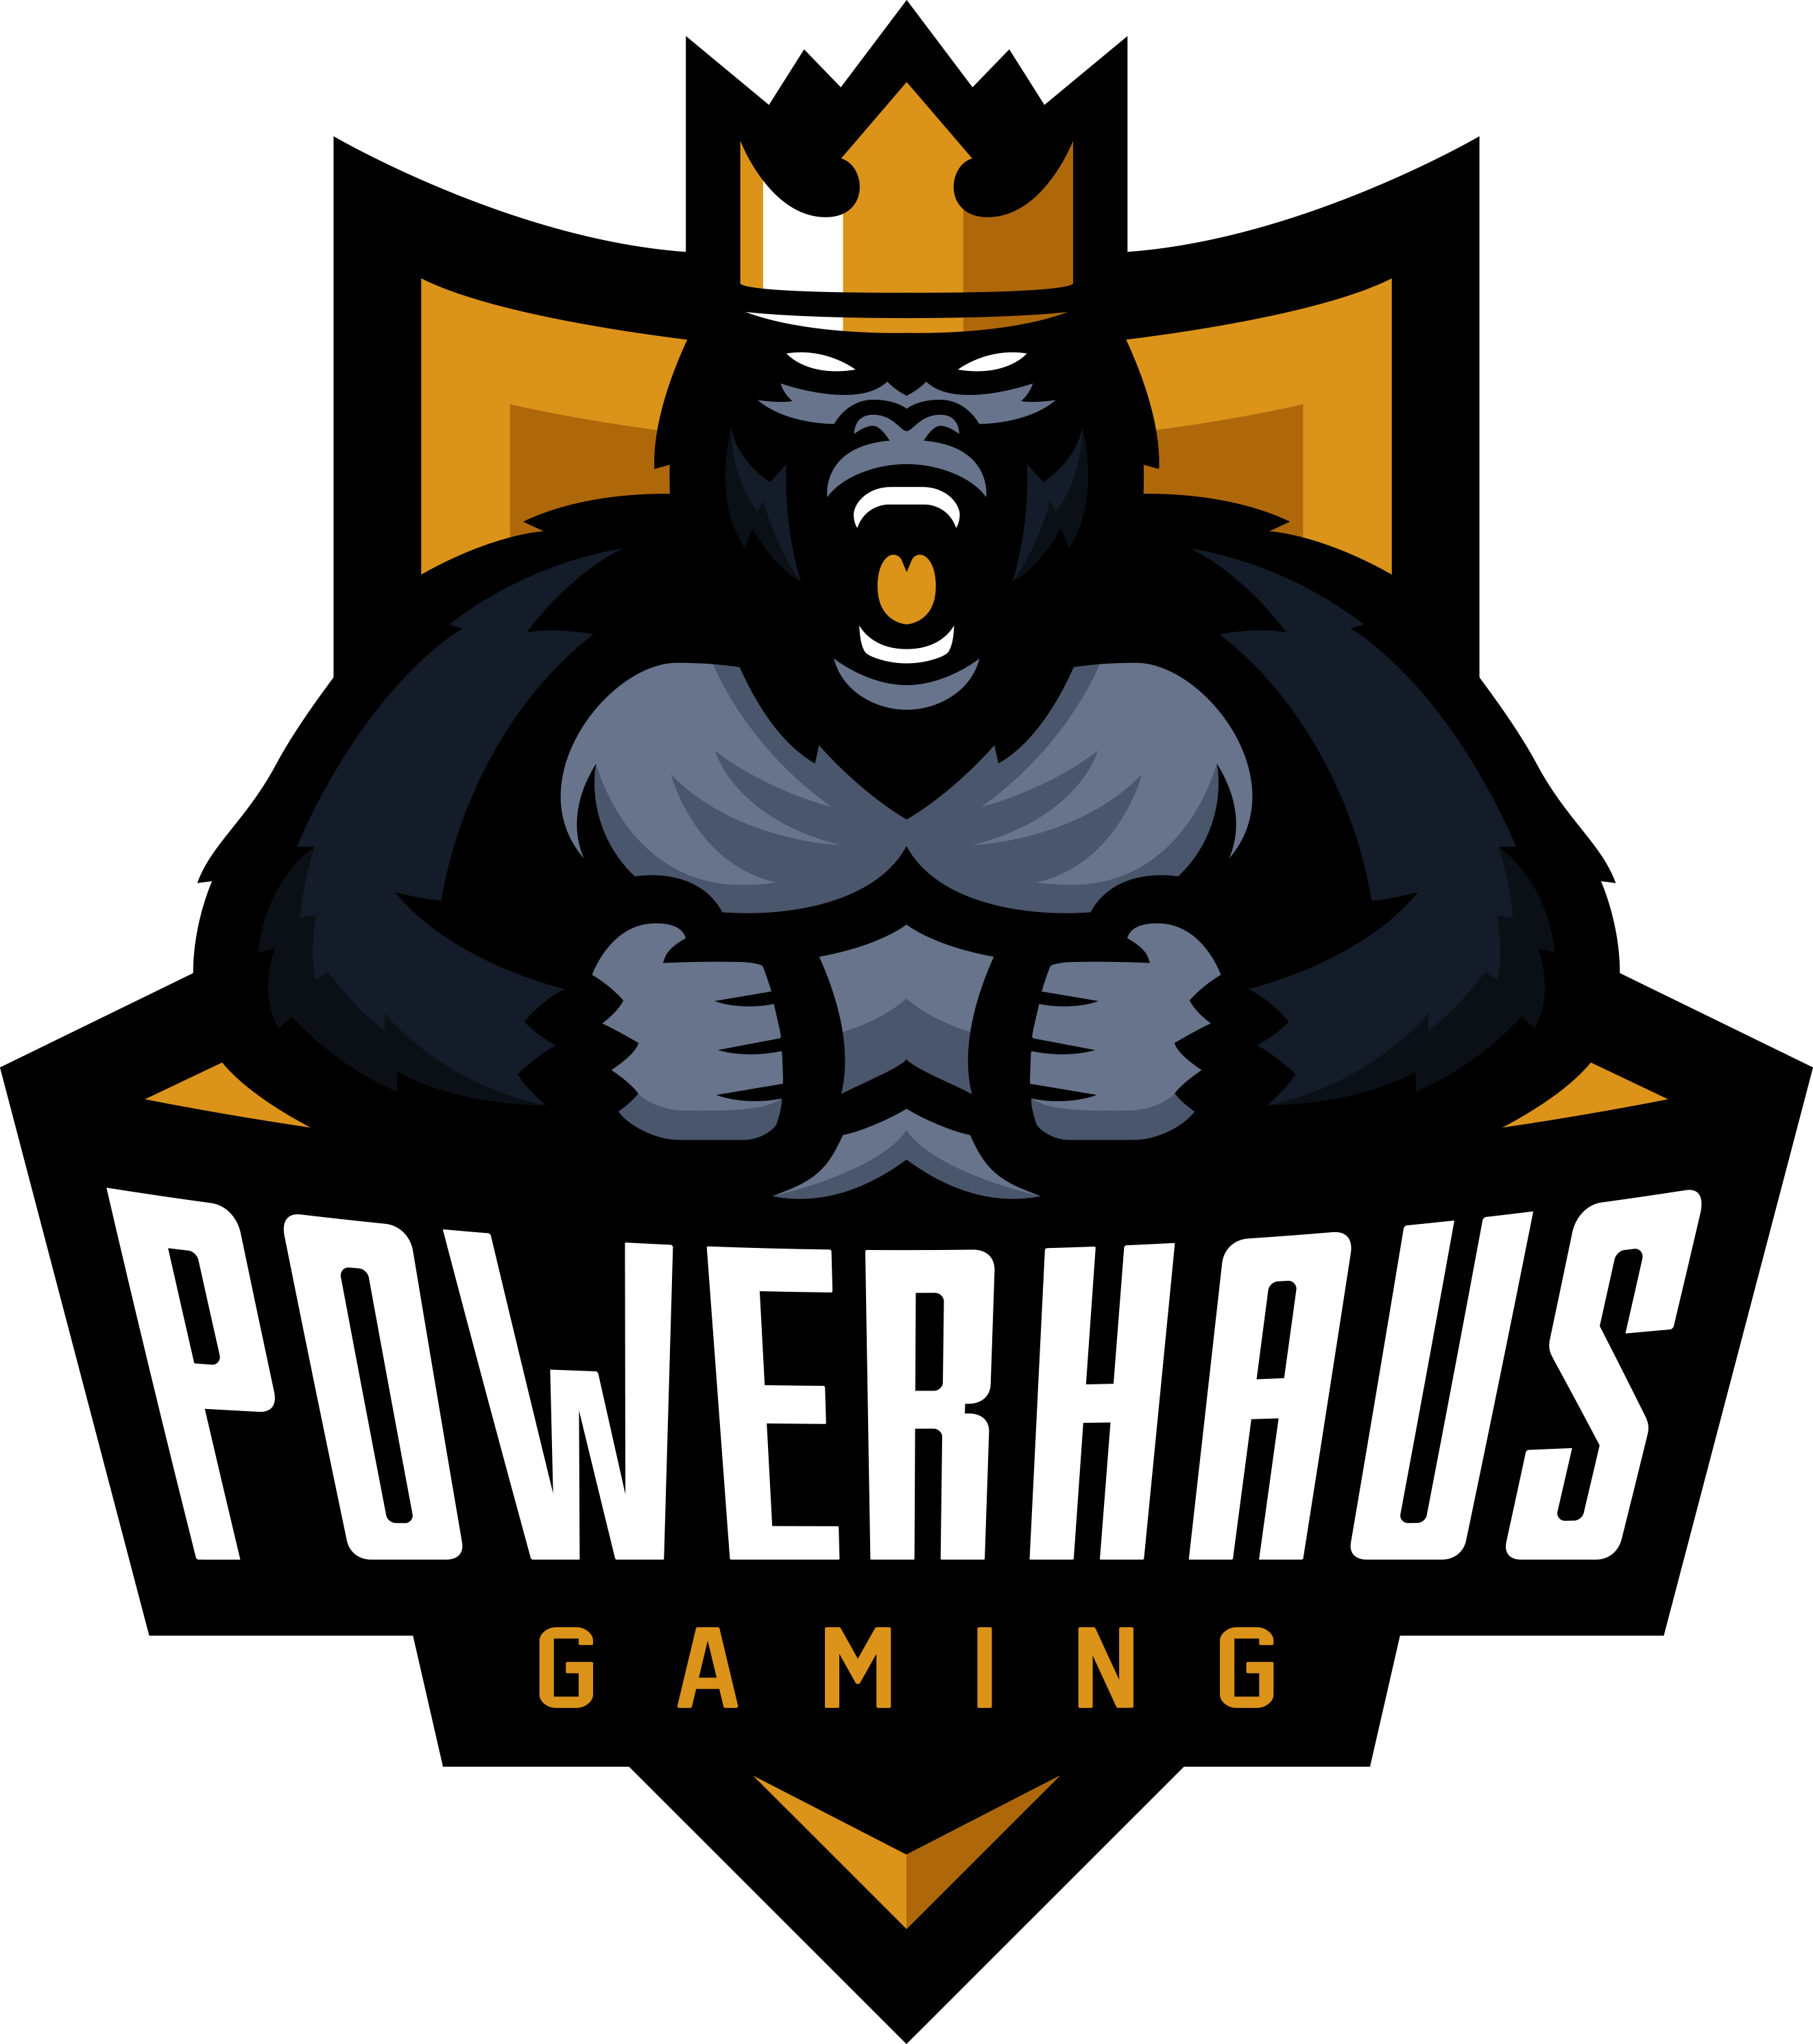 Powerhaus Purple - Gaming Mascot Logo Png (2644x2981)